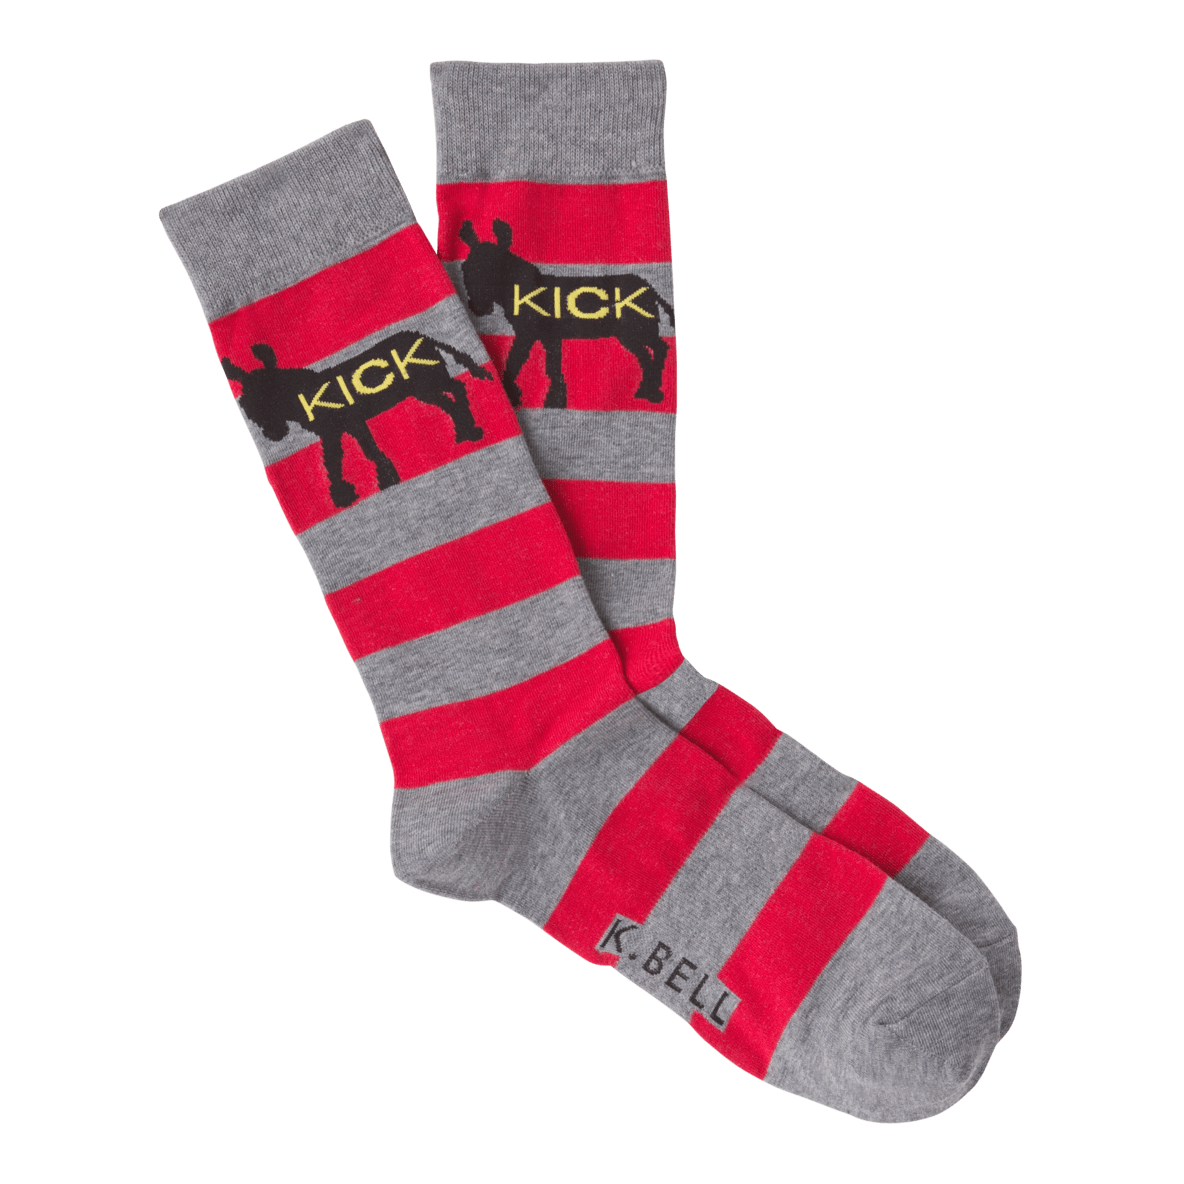 Kick Ass Socks Men’s Crew Sock Red